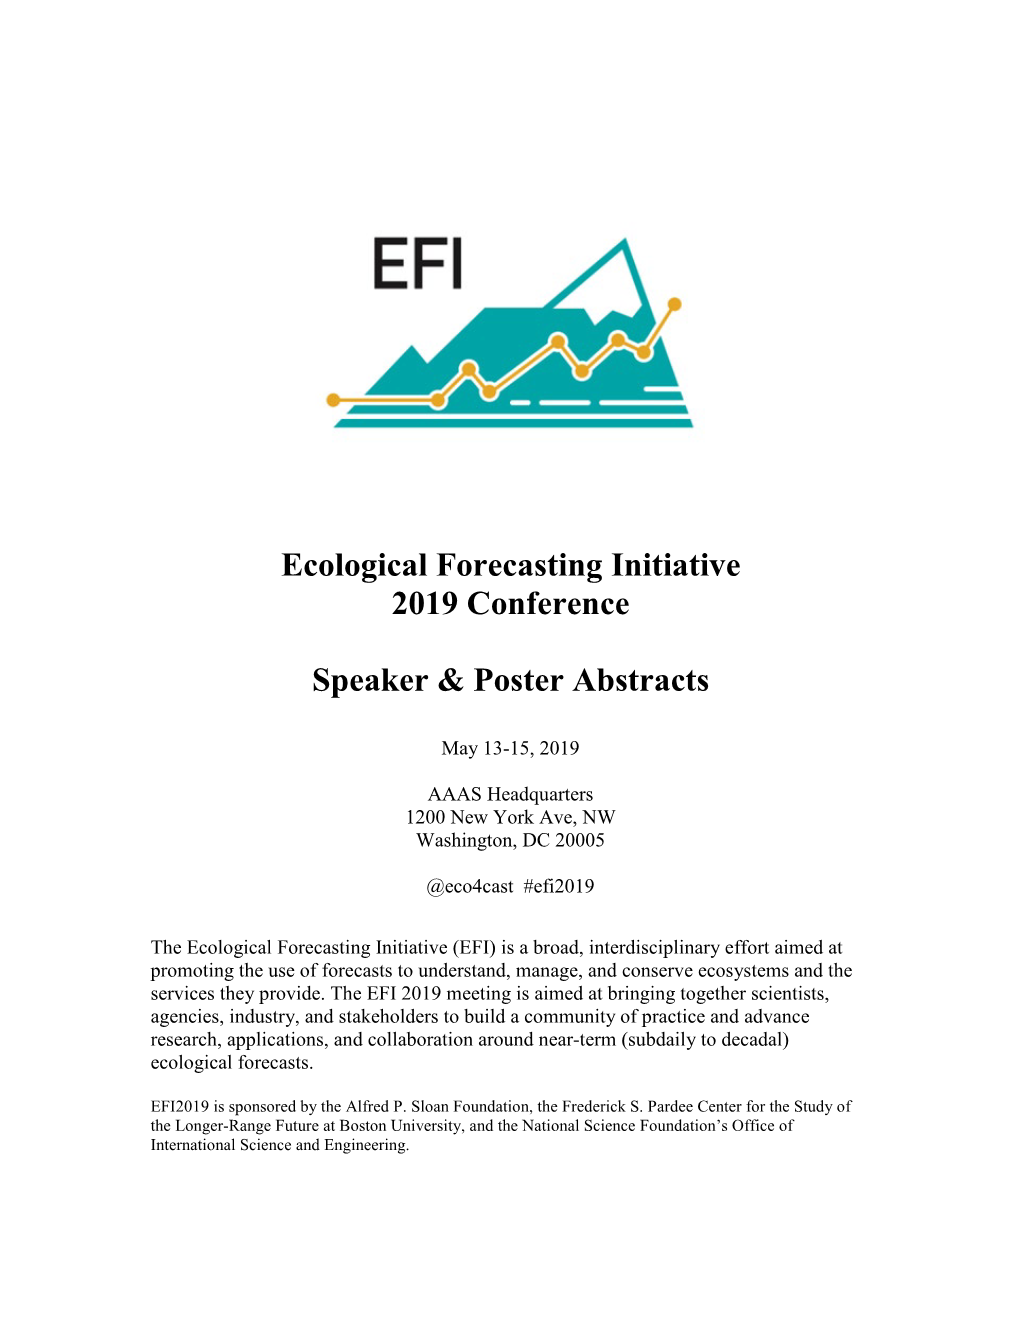 Ecological Forecasting Initiative 2019 Conference Speaker & Poster